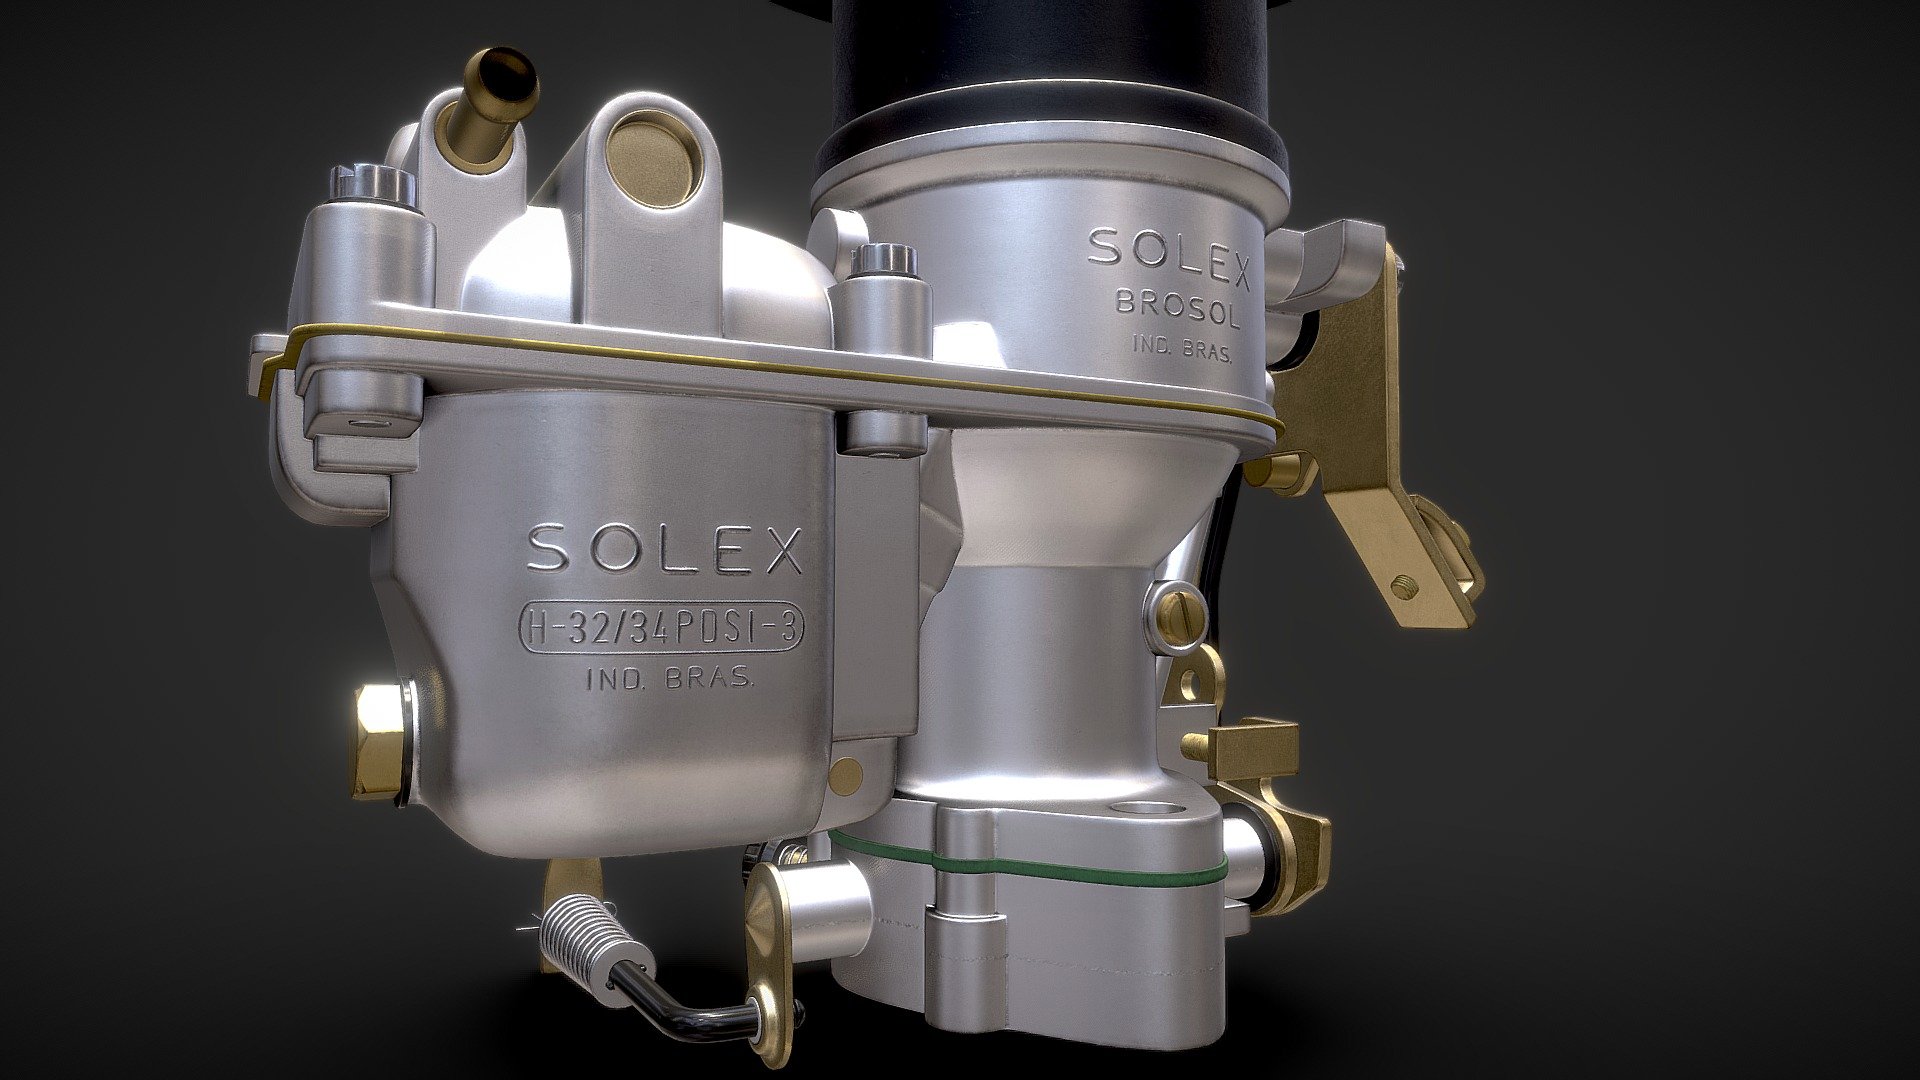 The Solex 32 carburetor (vintage engine part) - 3D model by